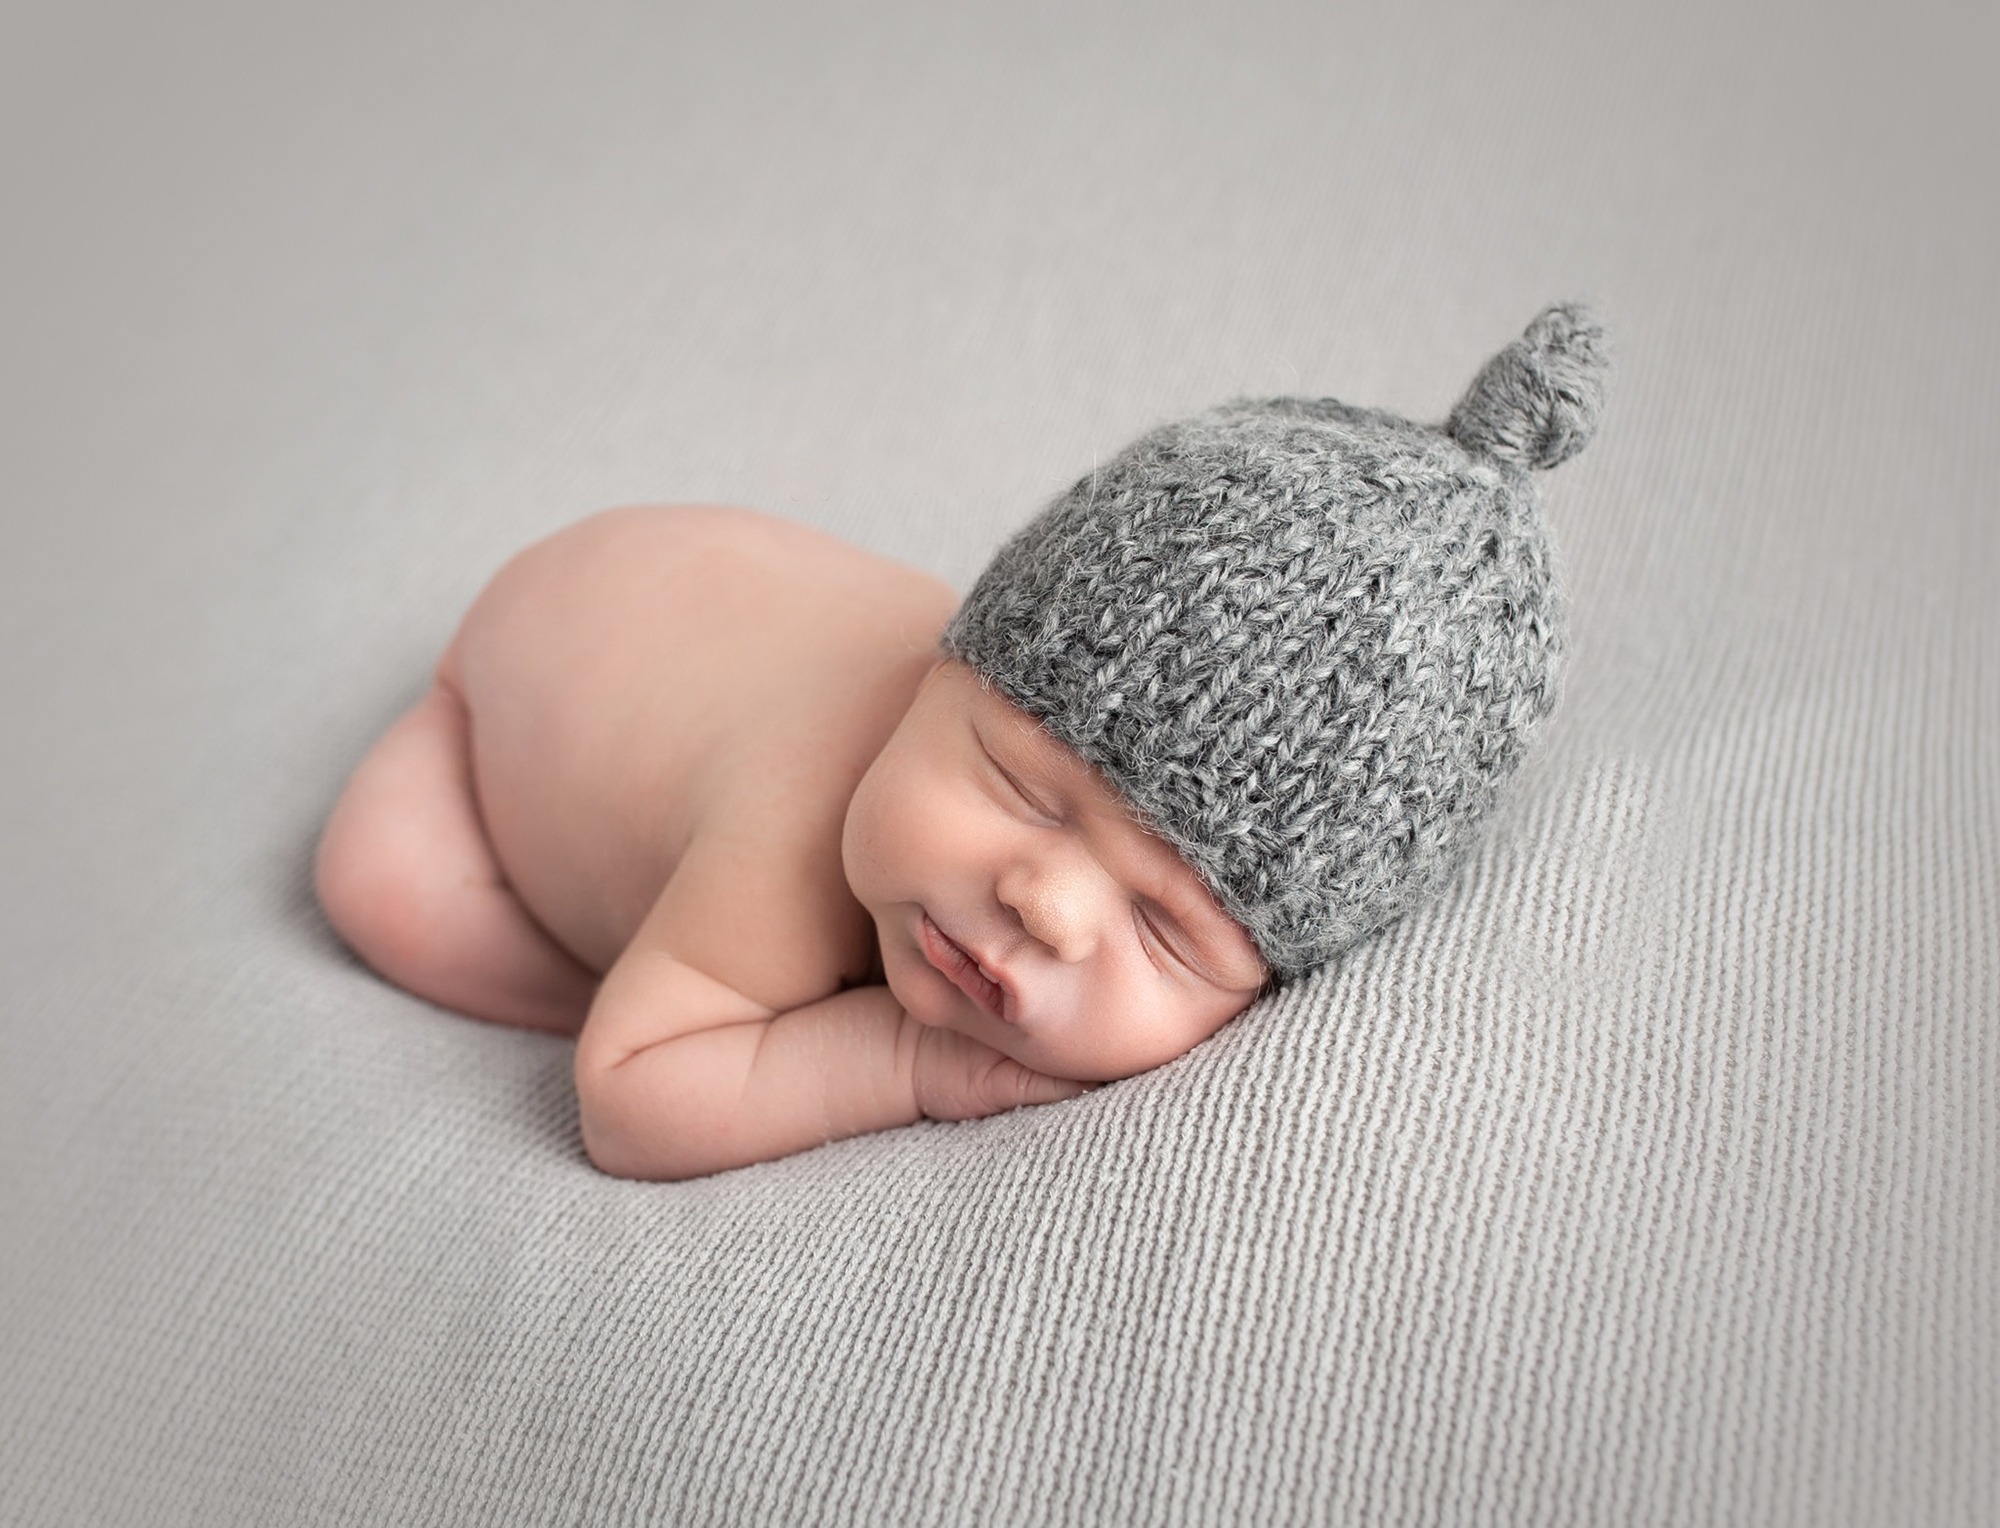 newborn baby wearing a hat posed asleep on grey blanket